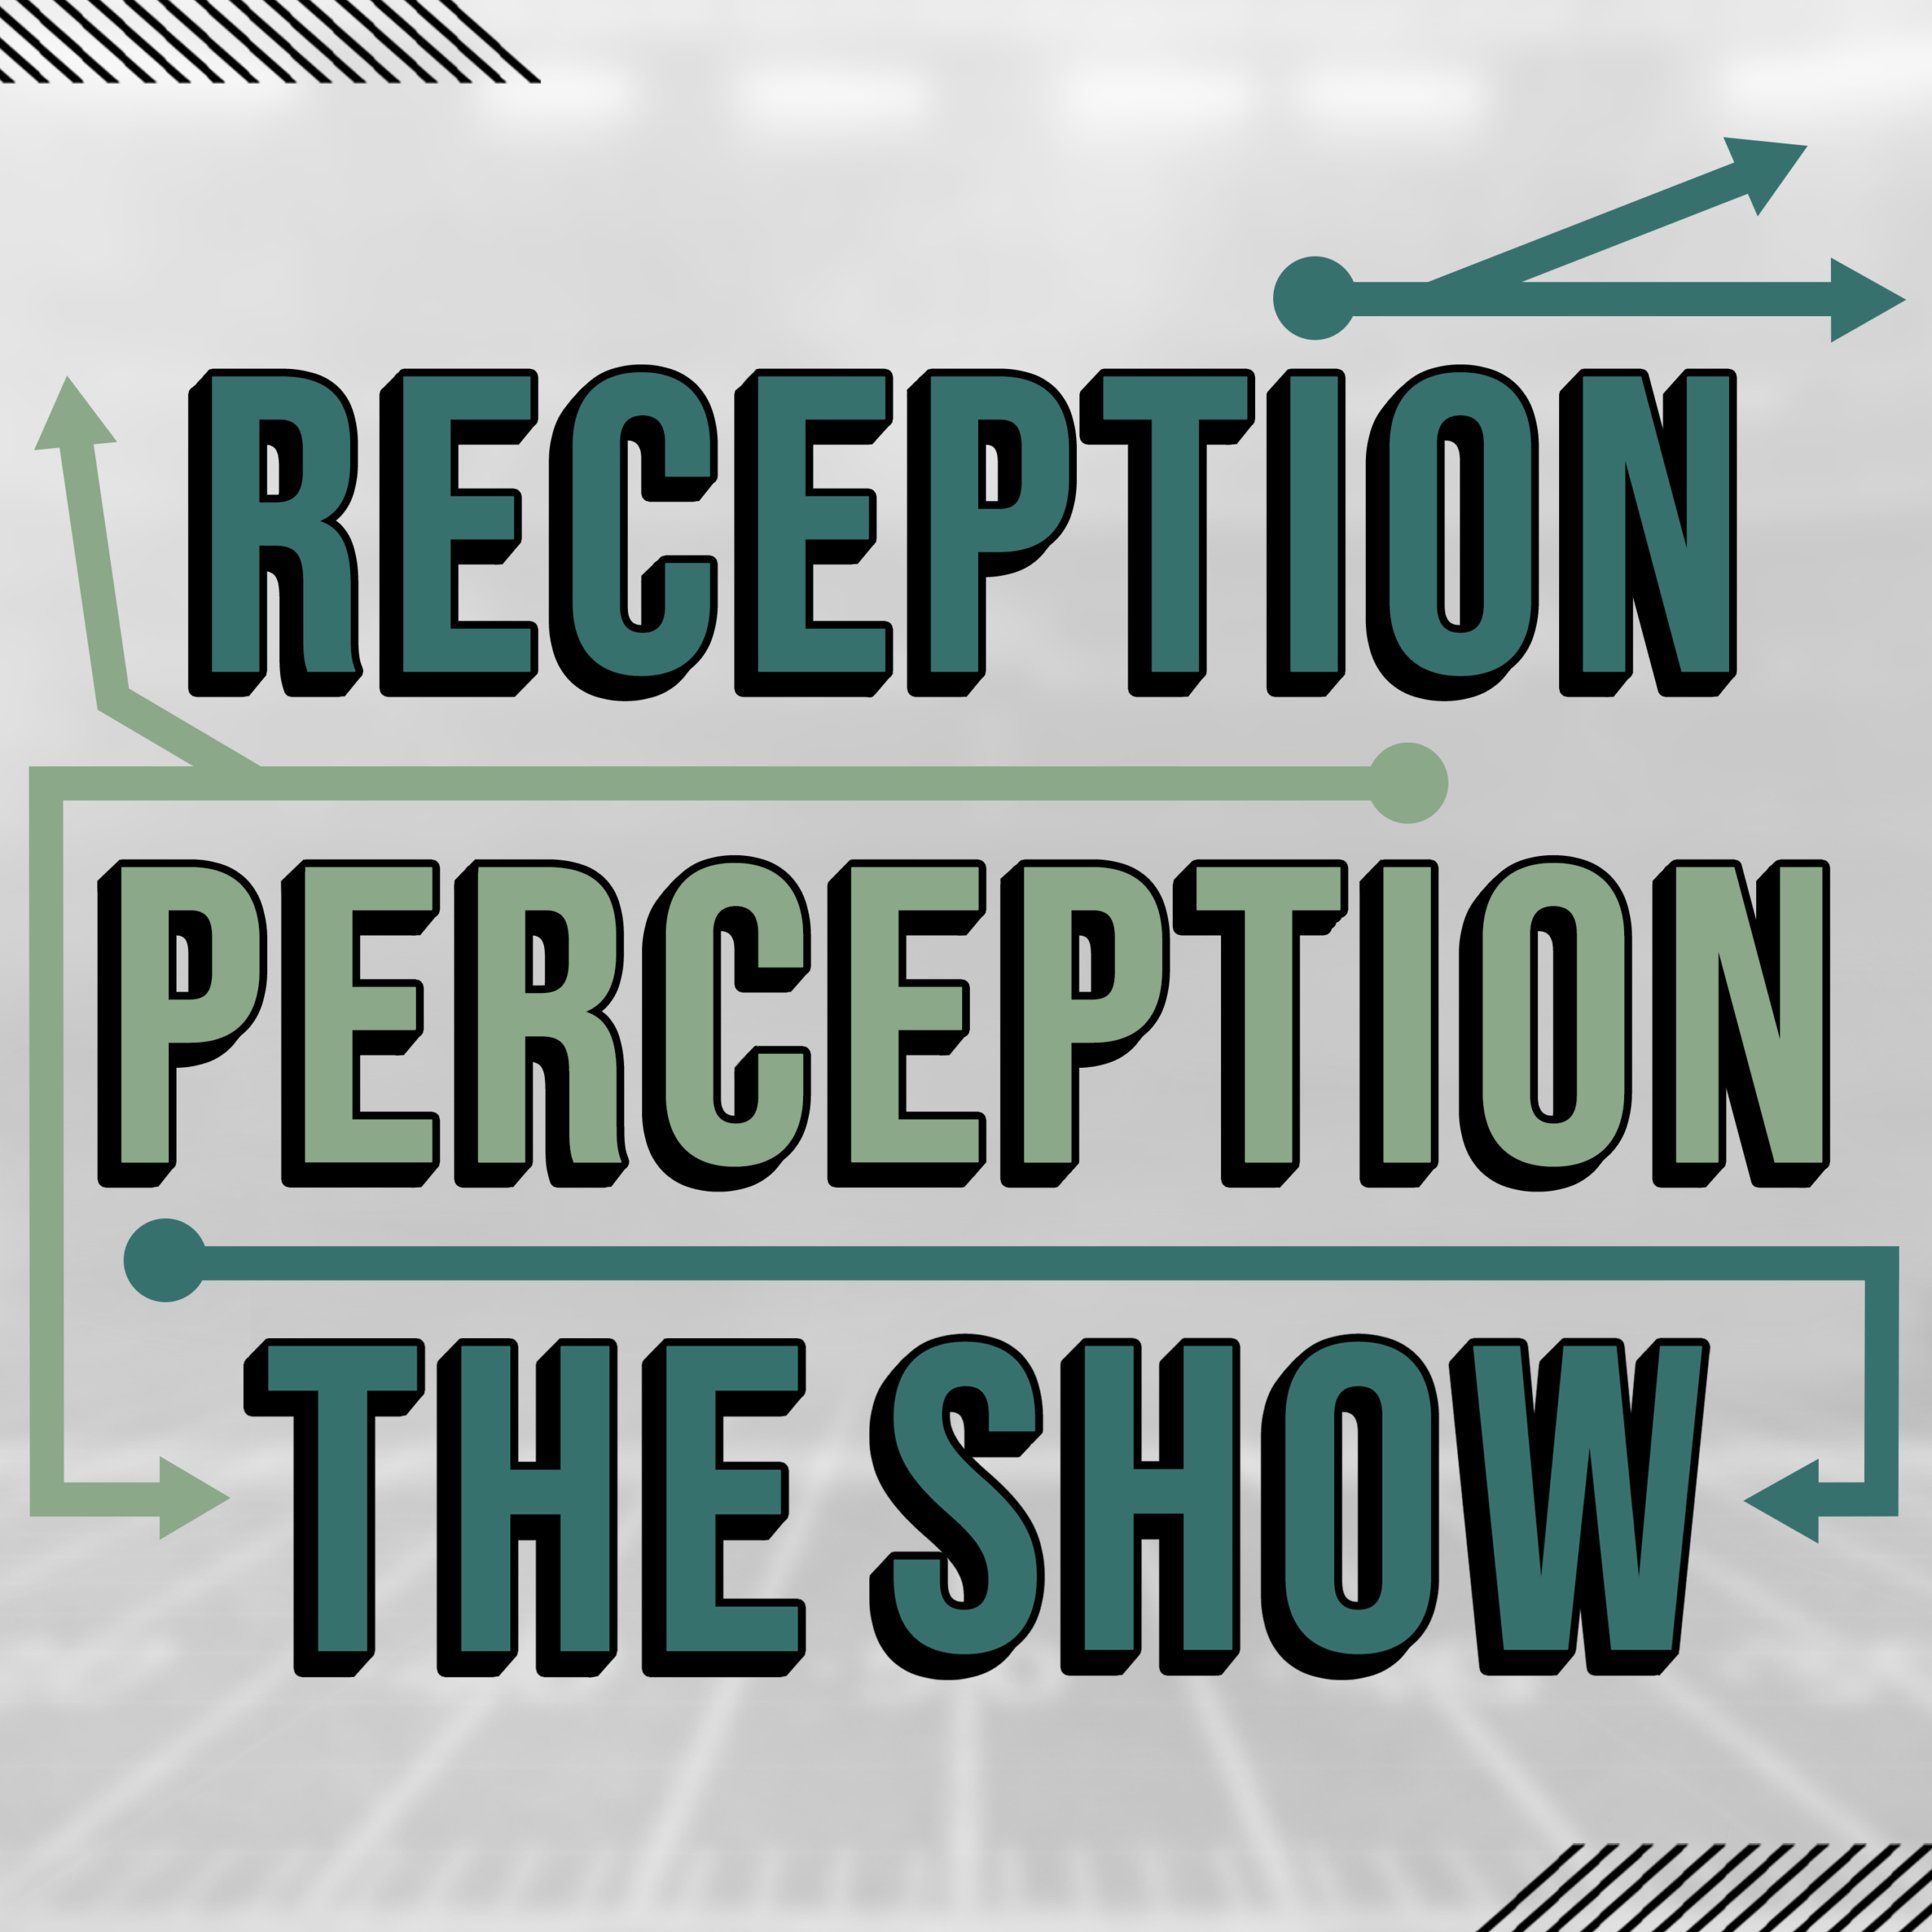 Reception Perception The Show – Taking Inventory of 2022 Pre-Season Predictions